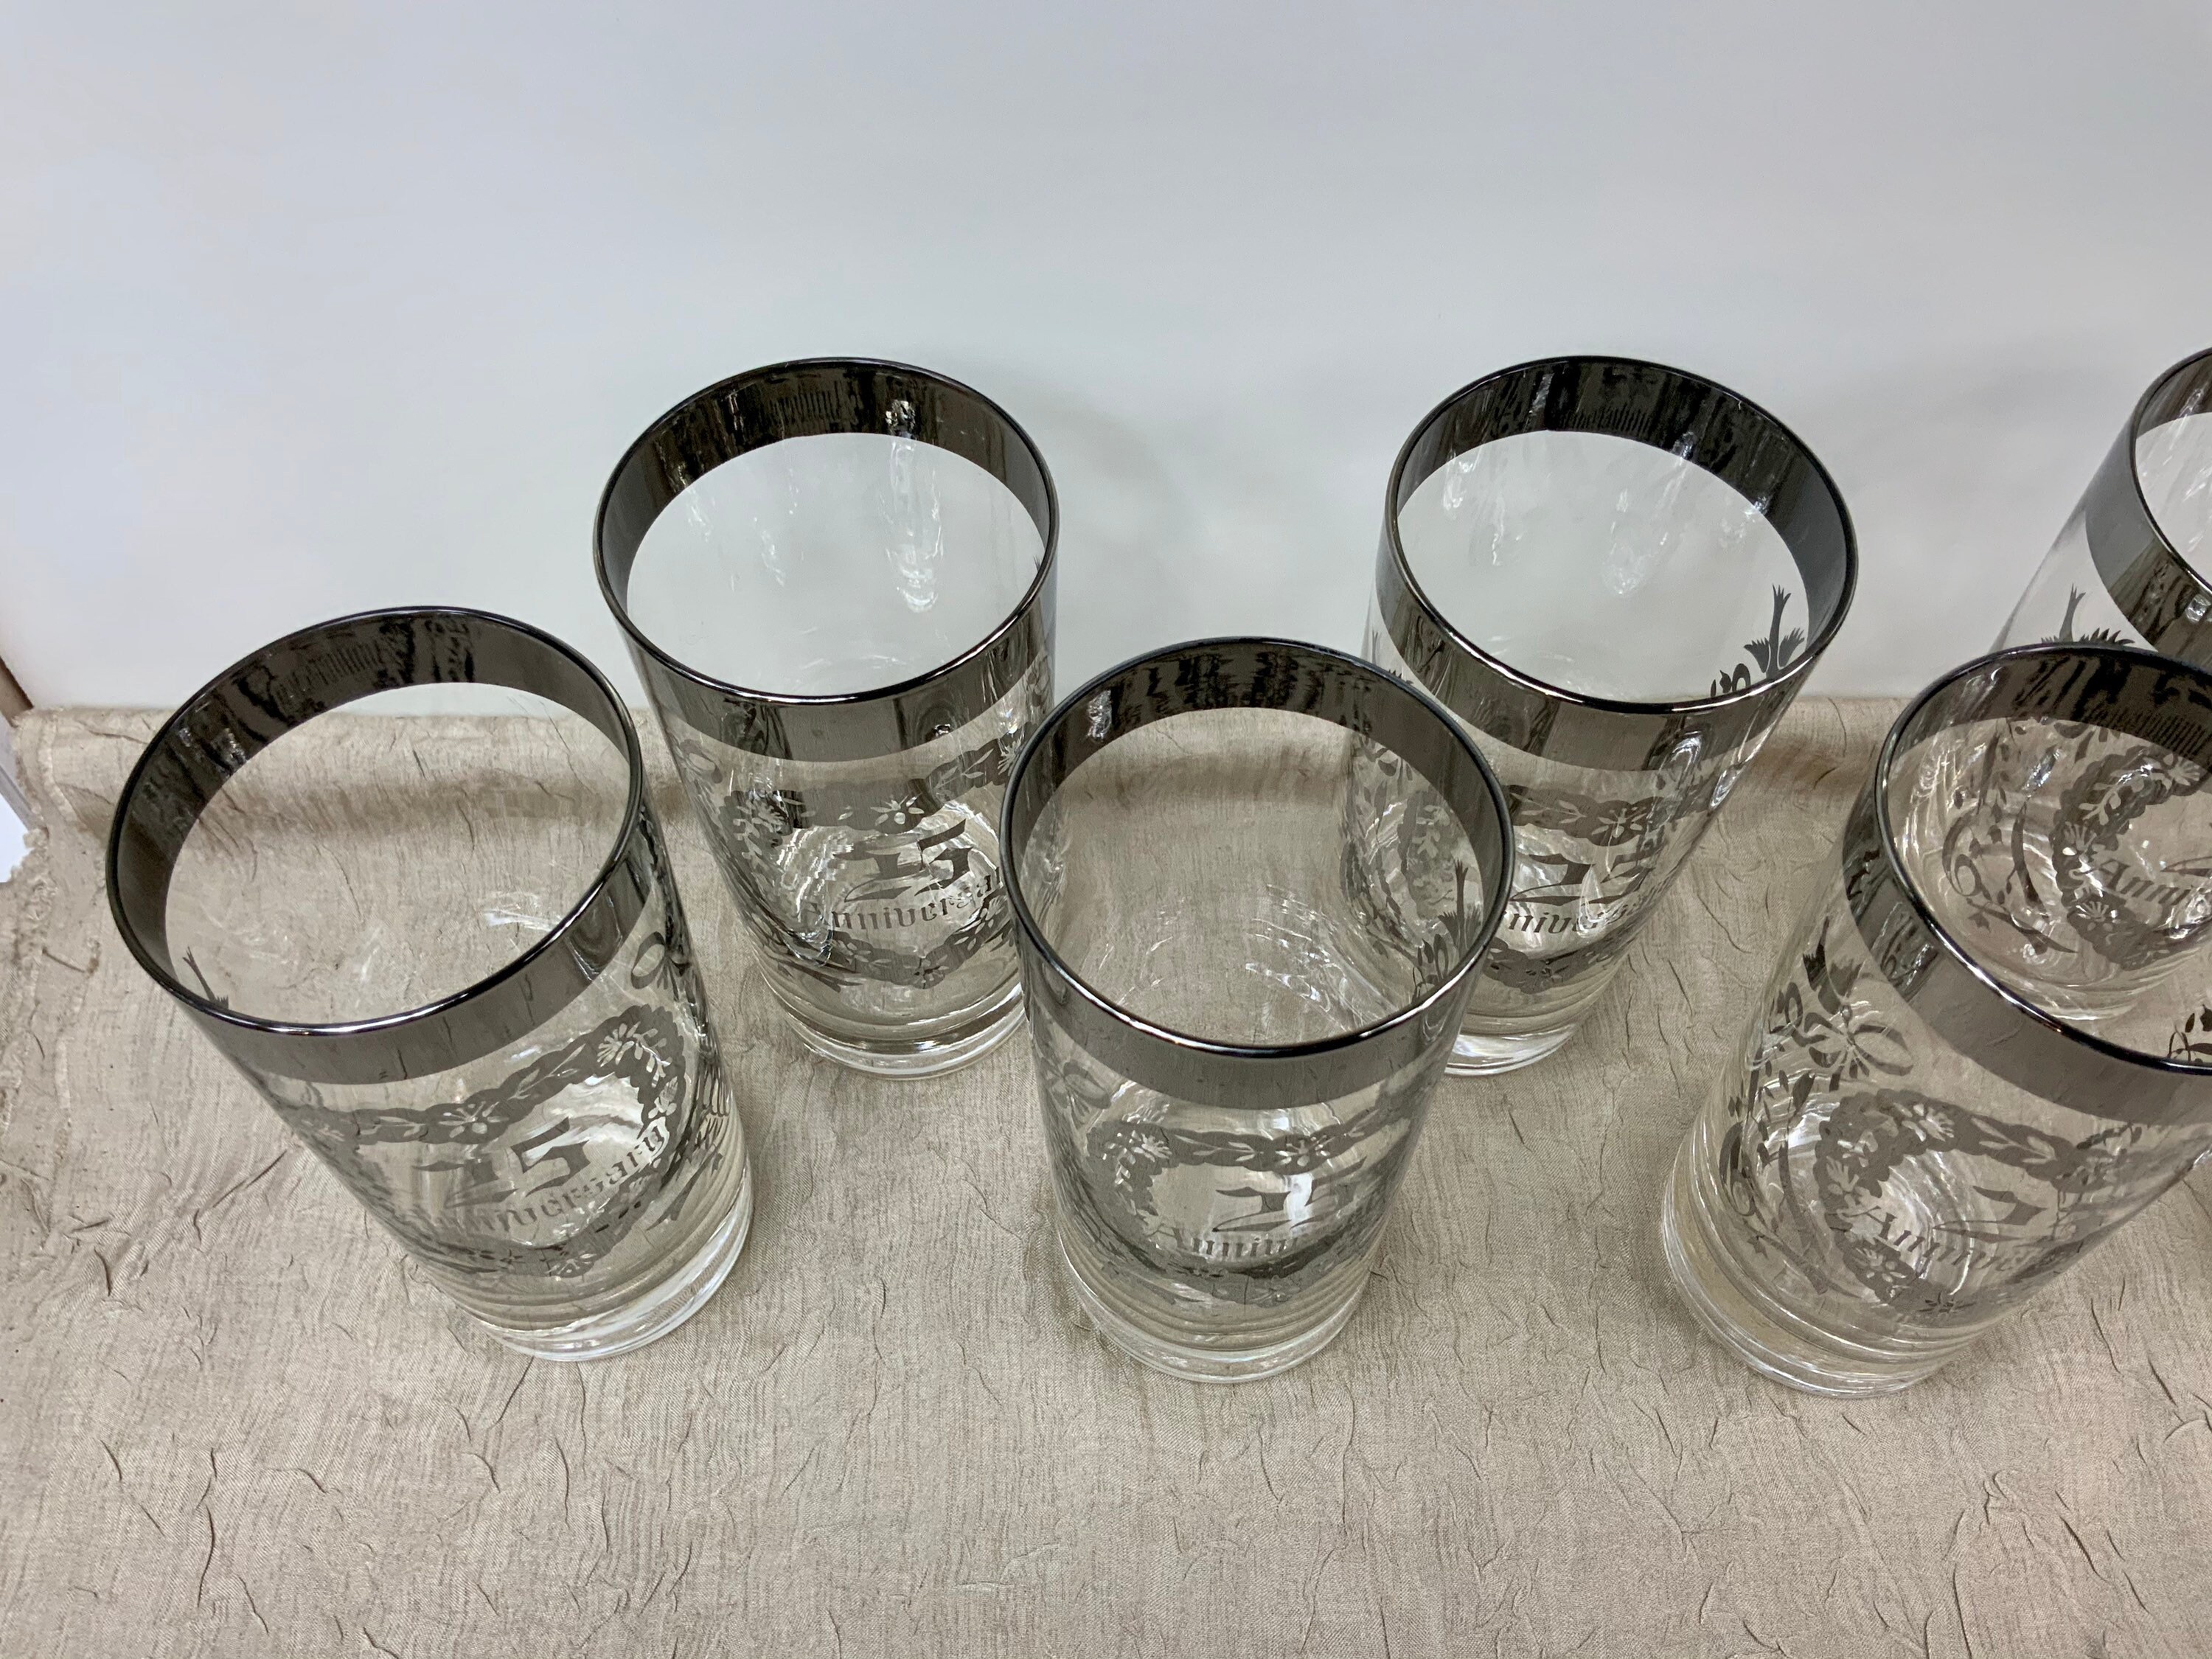 Vintage Set of 4 Silver Rim Water Glasses